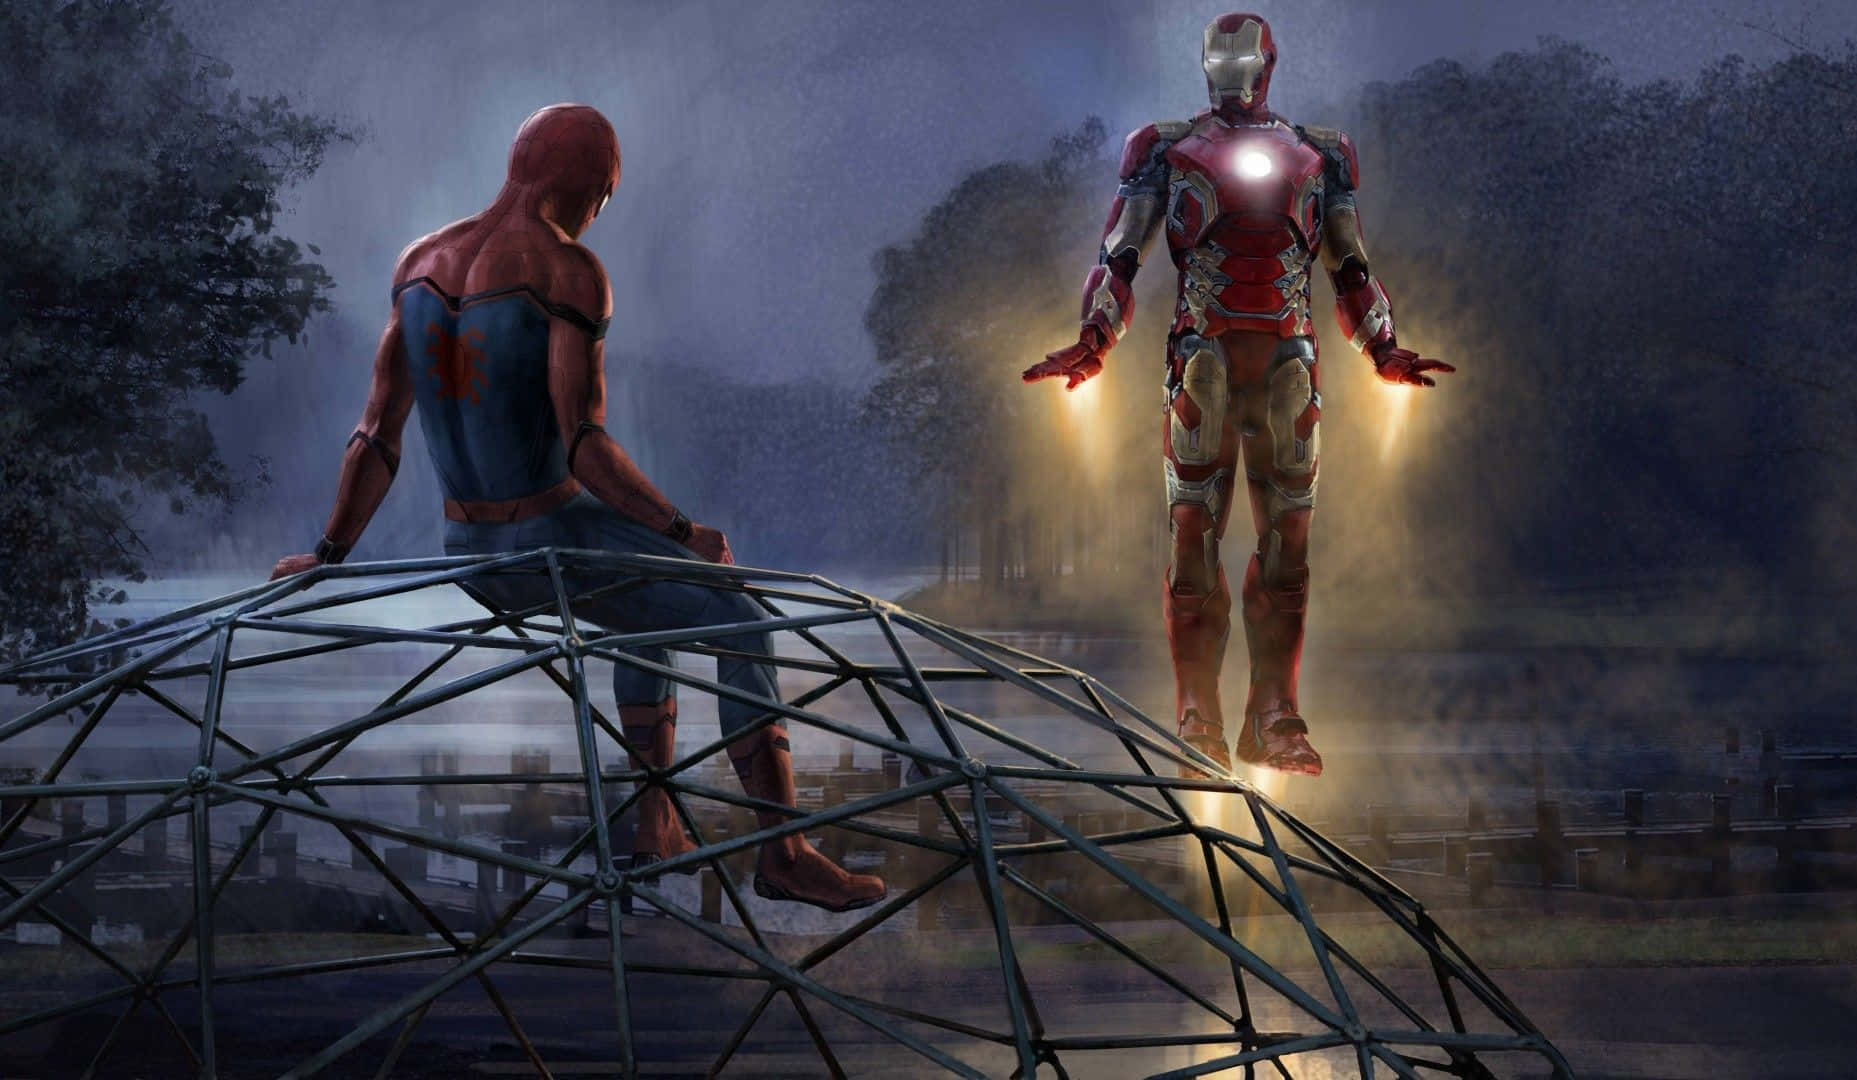 Iron Manand Spider Man Meetingat Night